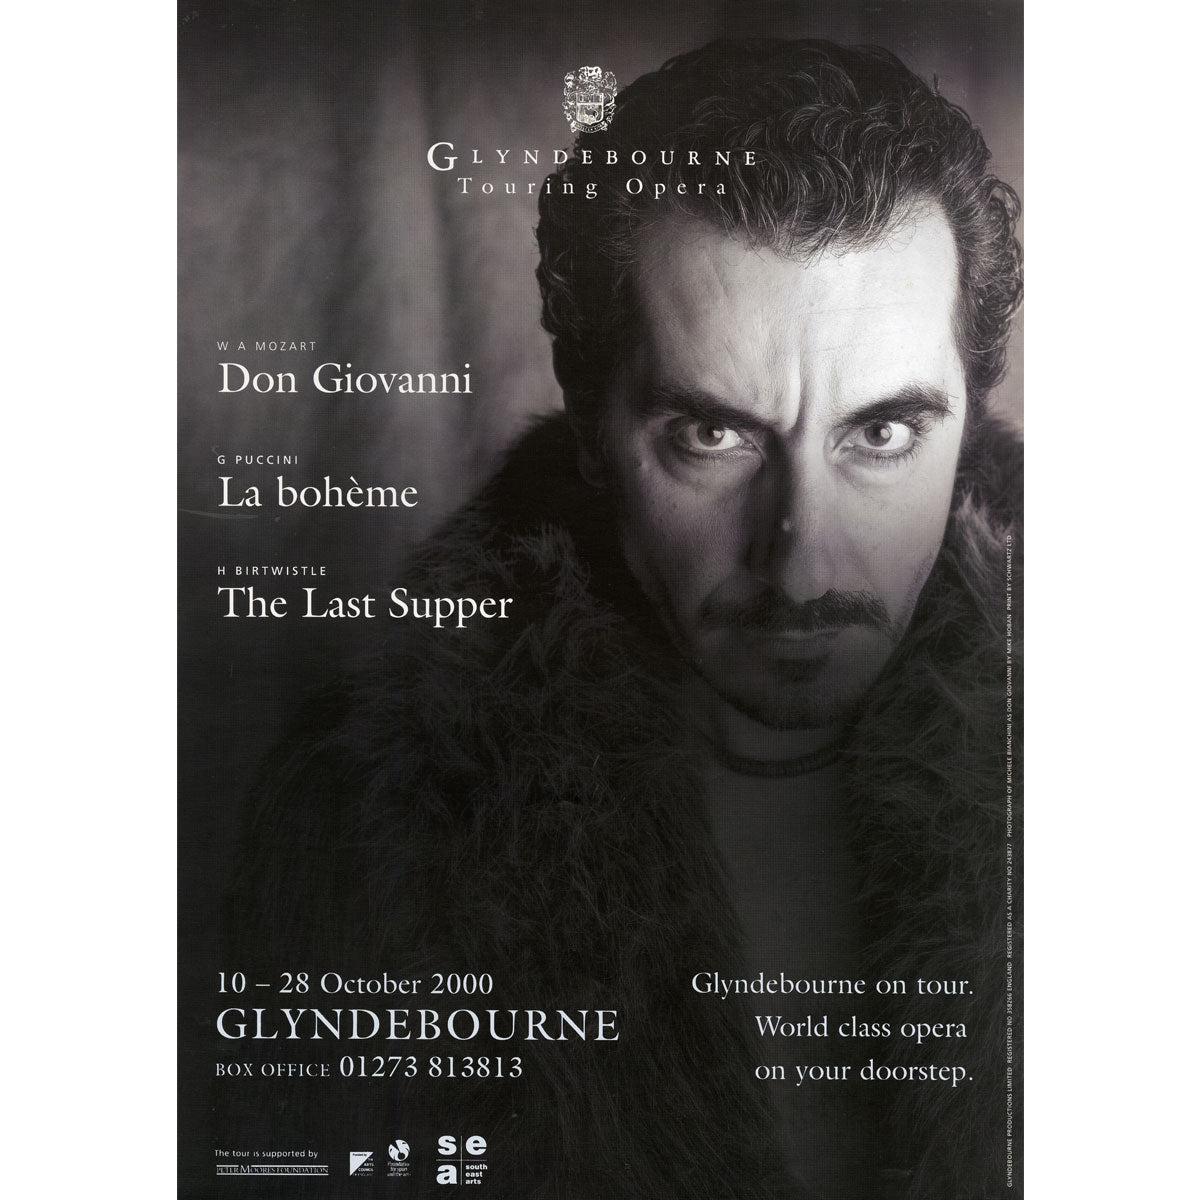 Glyndebourne Touring Opera 2000 Poster